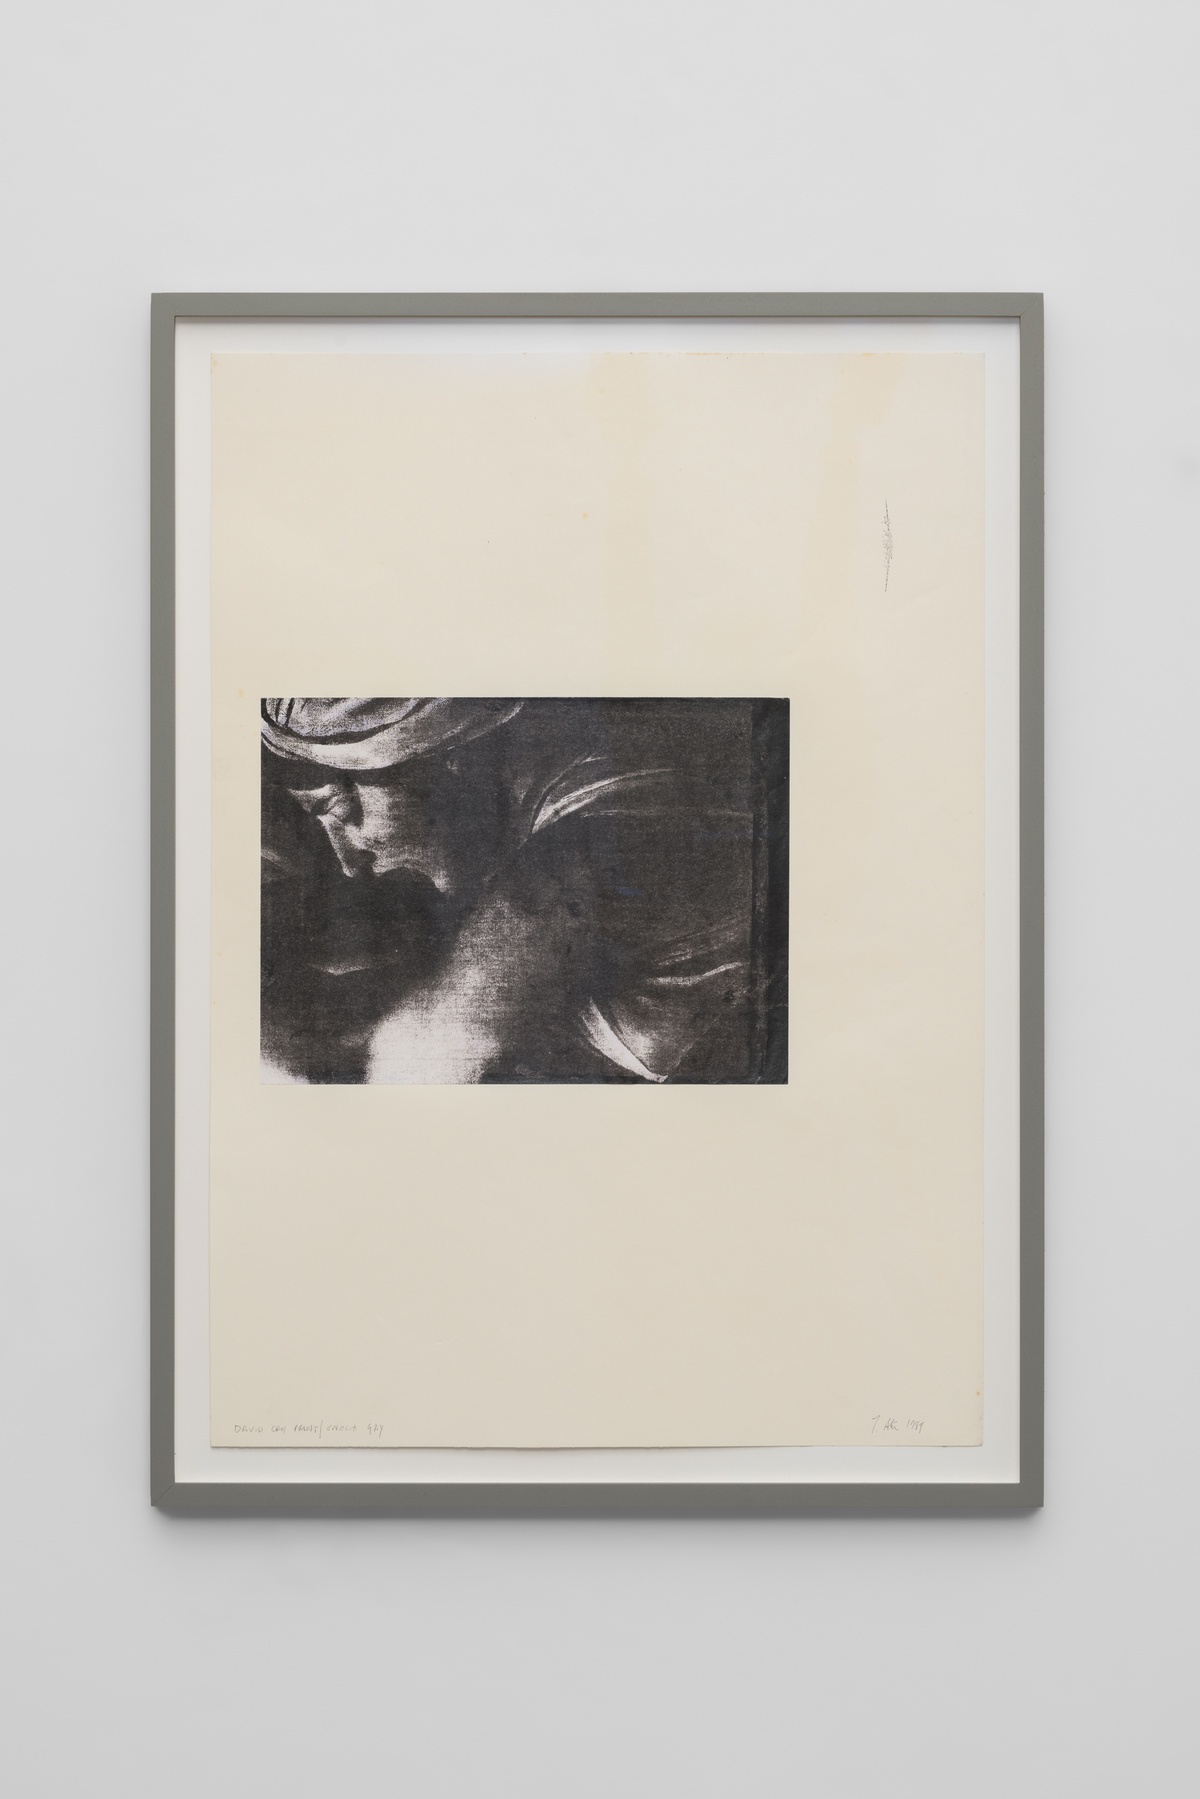 Terry Atkinson, David Cry Print/Enola Gay, 1989transfer print on paper41,6 x 59,2 cm